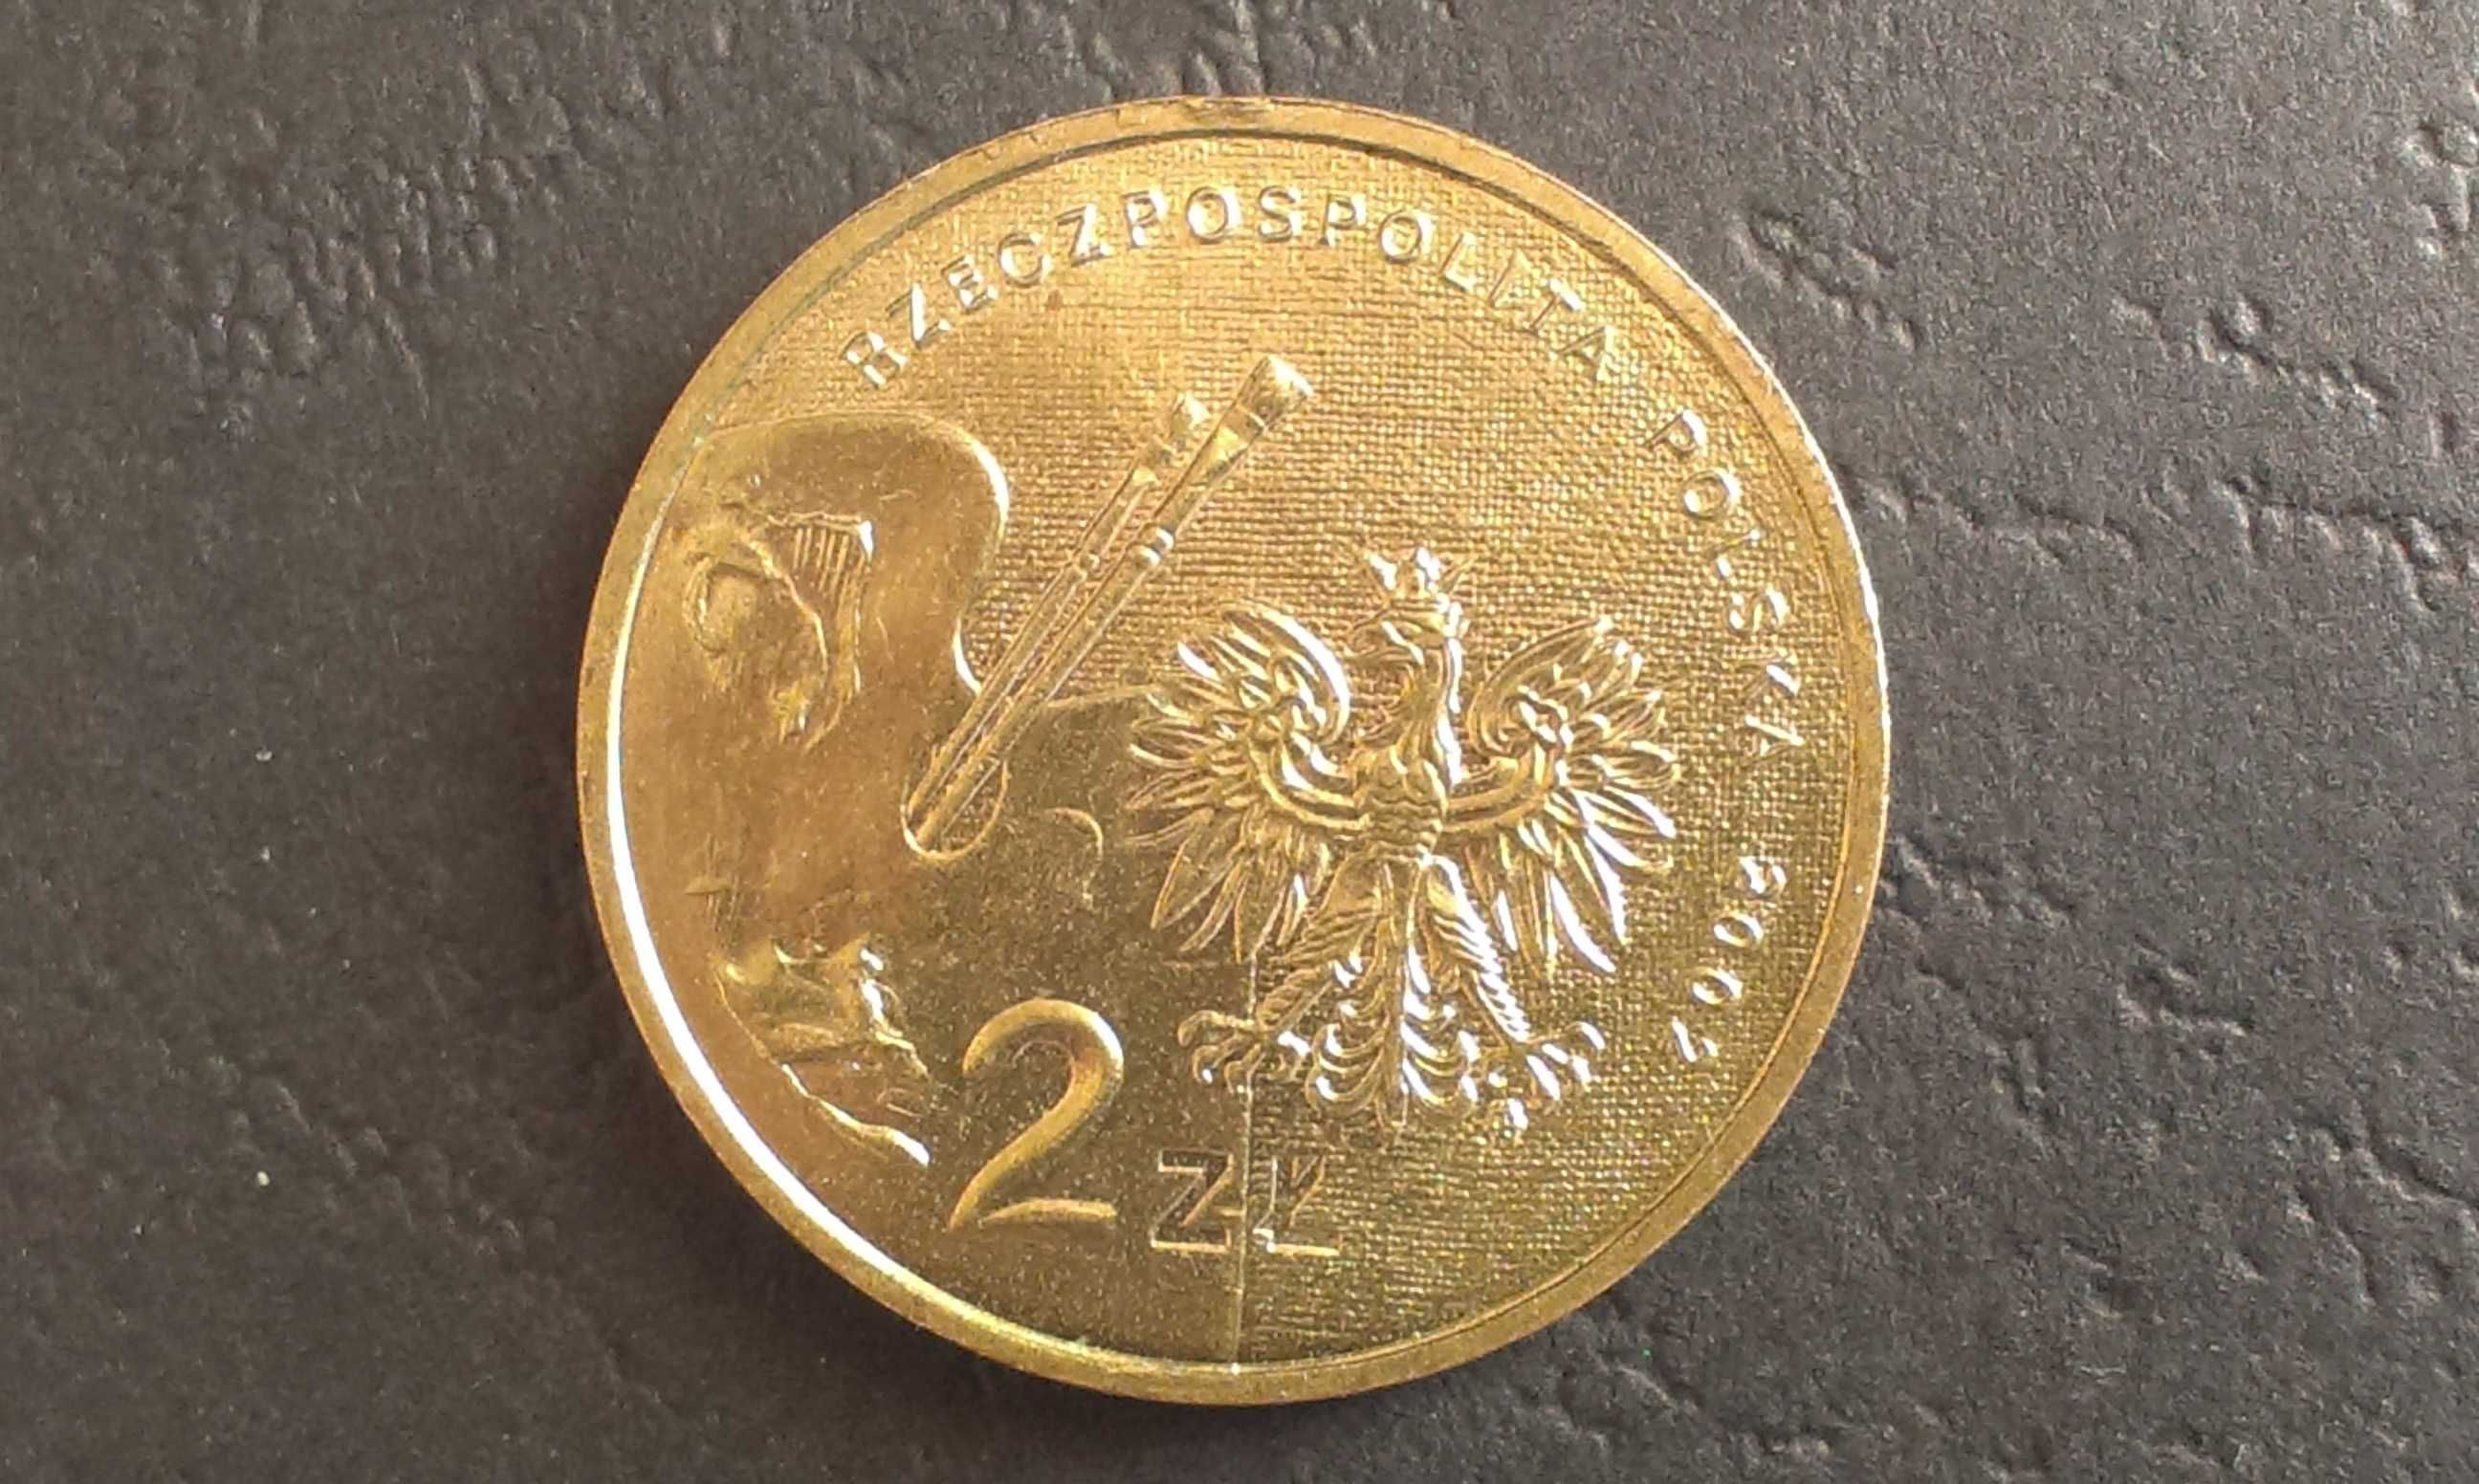 Moneta 2 złote 2002 rok Jan Matejko.